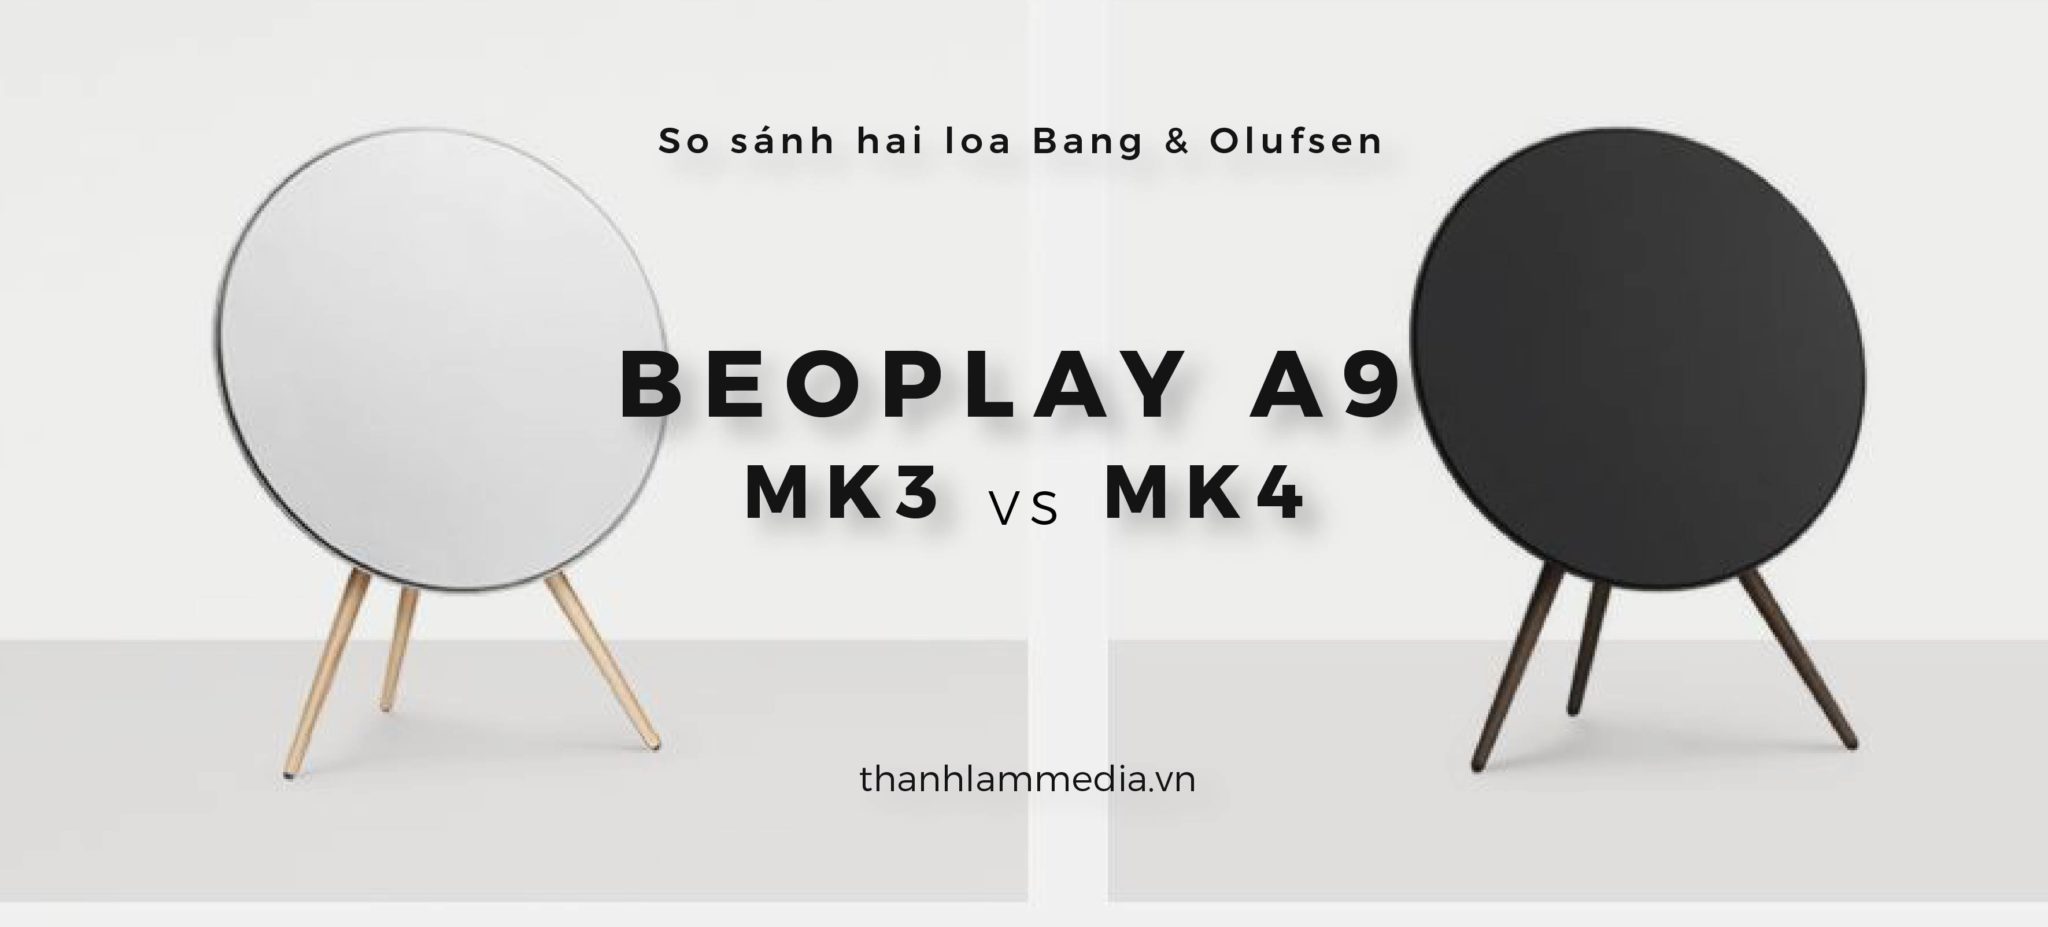 So sánh hai loa Beoplay A9 Mk3 và Beoplay A9 Mk4 21